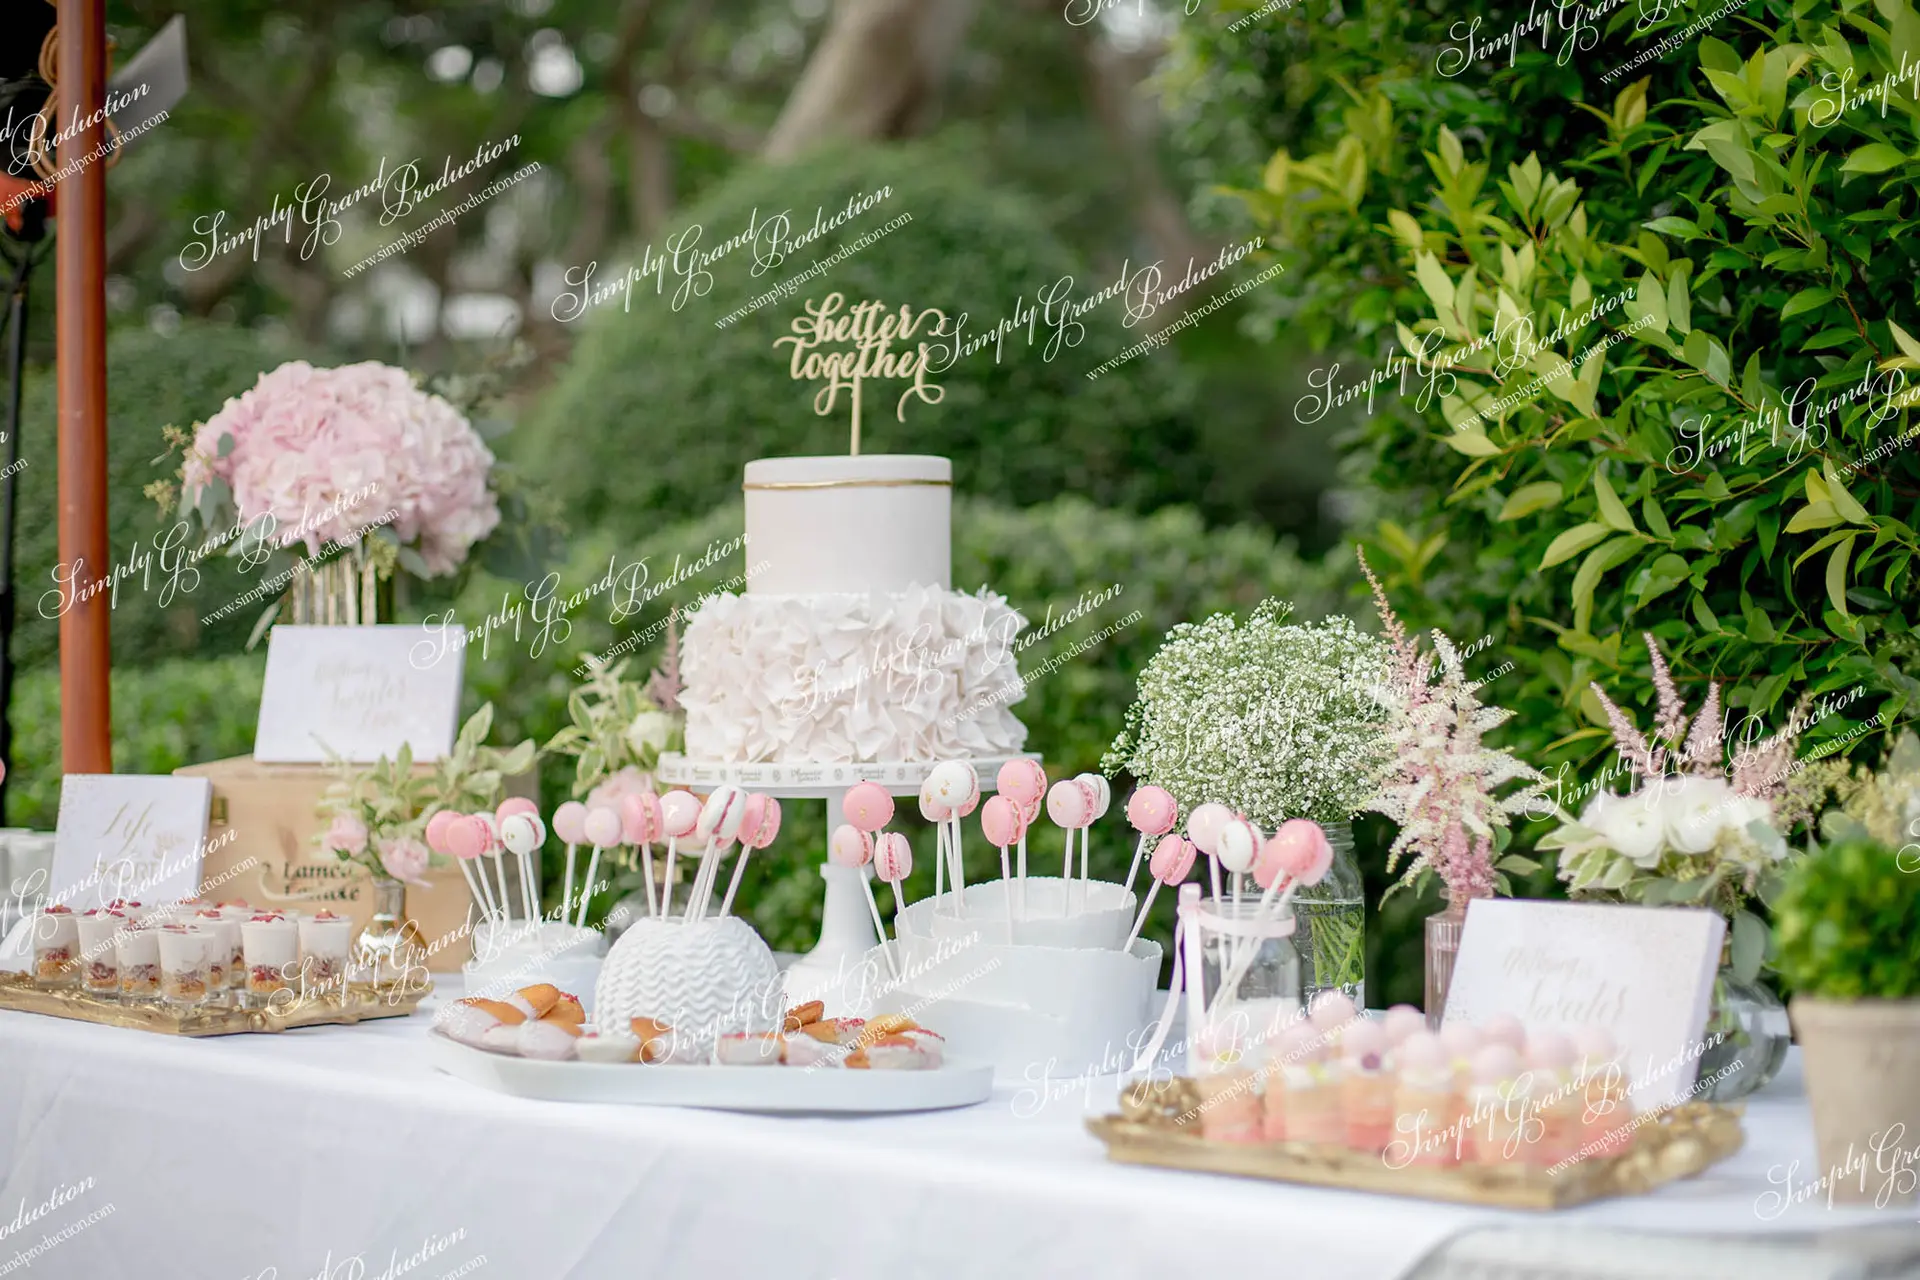 Simply_Grand_Production_Outdoor_wedding_decoration_dessert_cake_Repulse_Bay_1_1.jpg